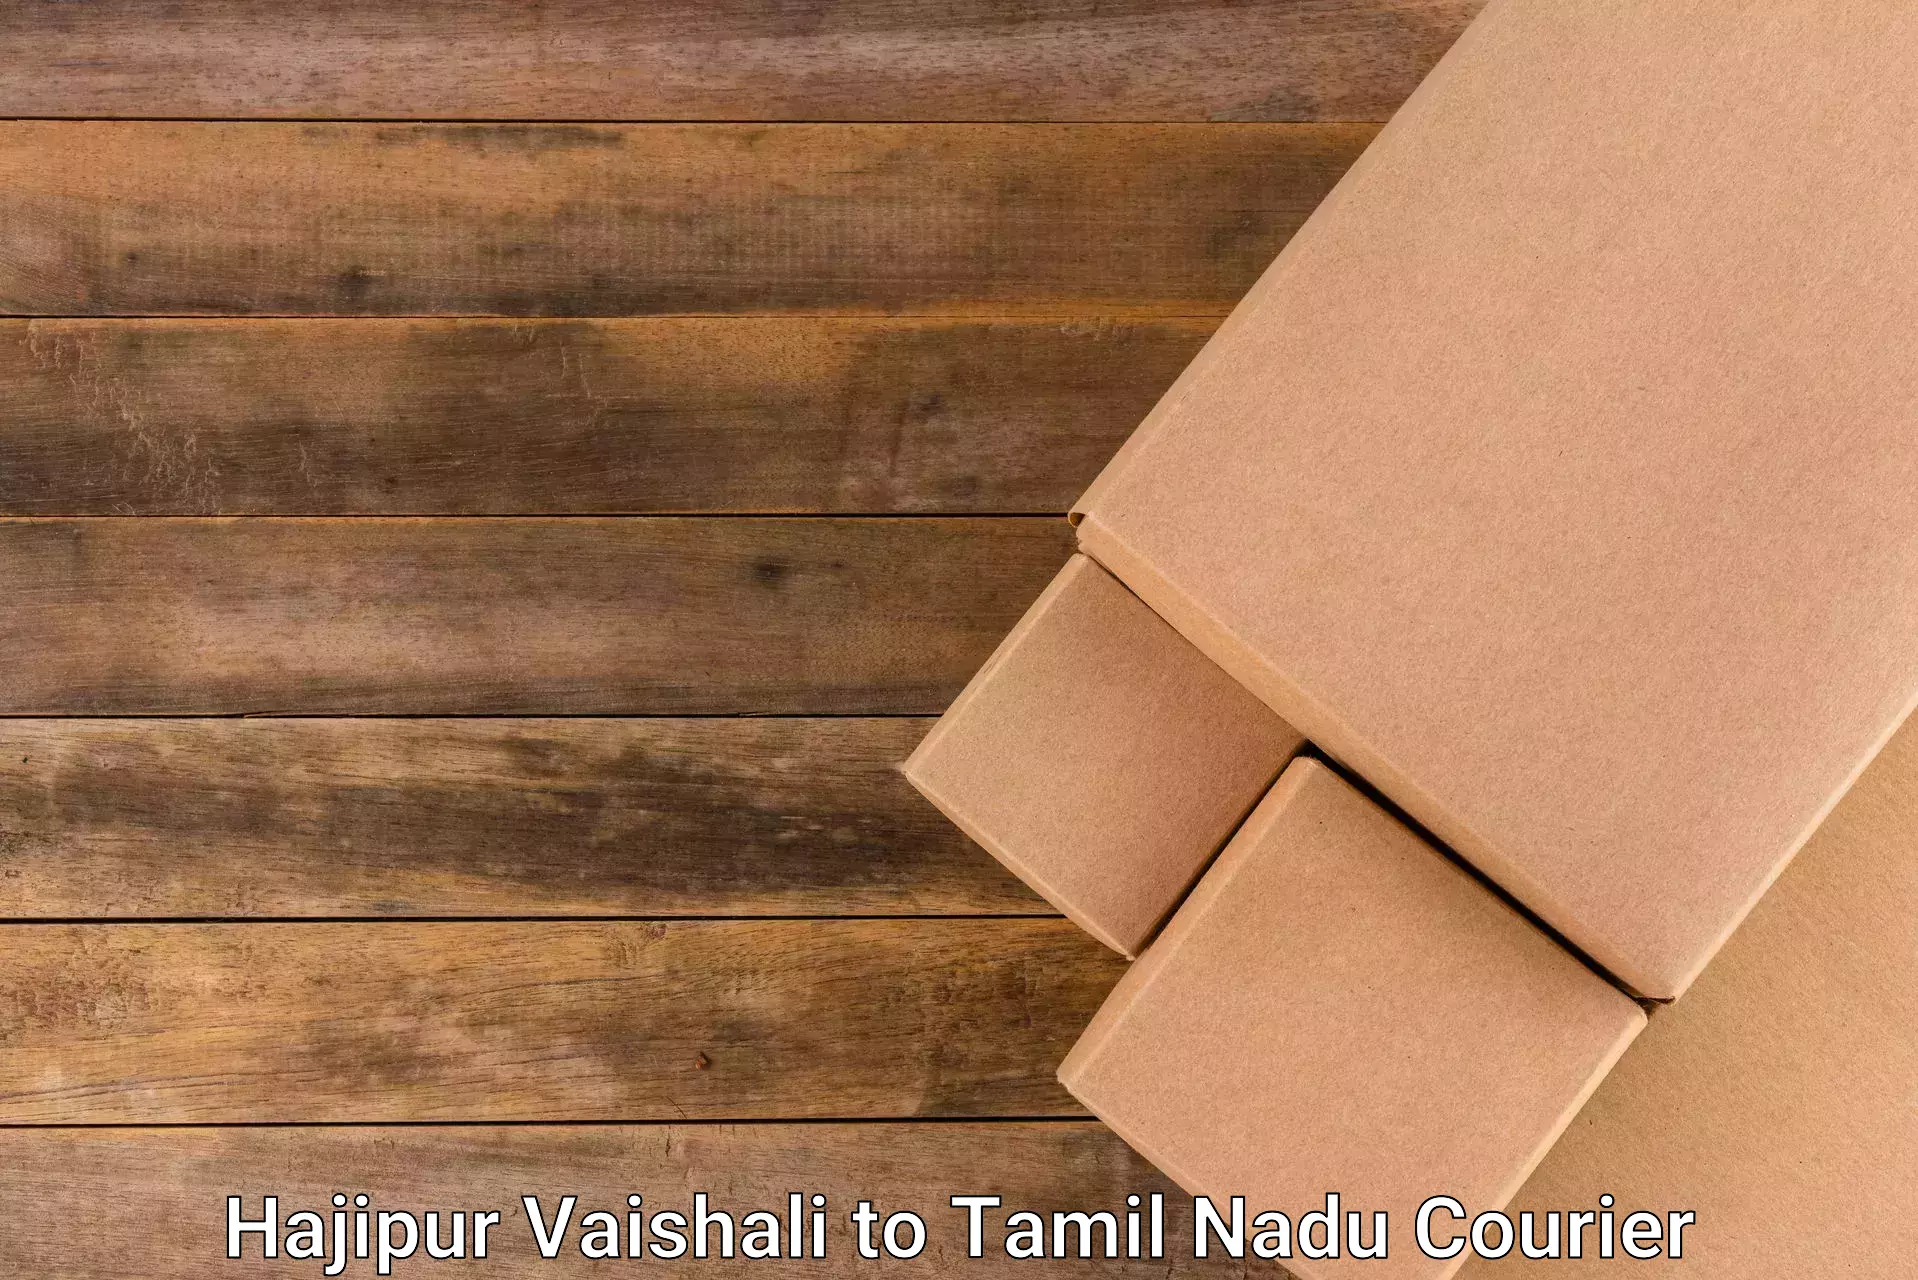 E-commerce shipping partnerships Hajipur Vaishali to Sri Ramachandra Institute of Higher Education and Research Chennai